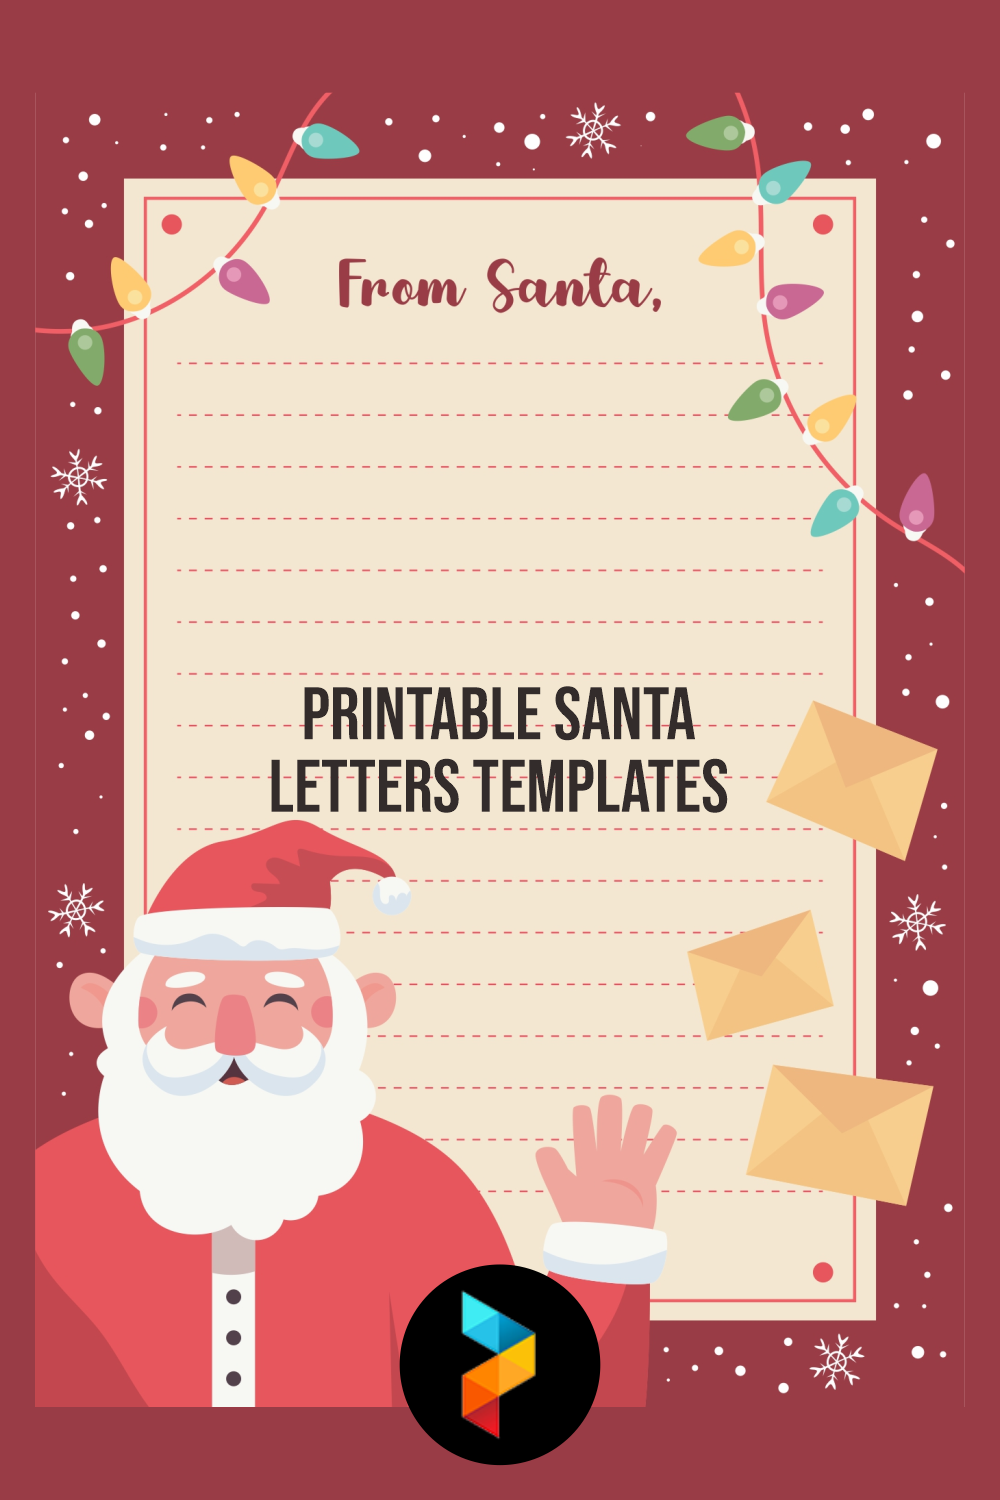 Printable Santa Letters Templates